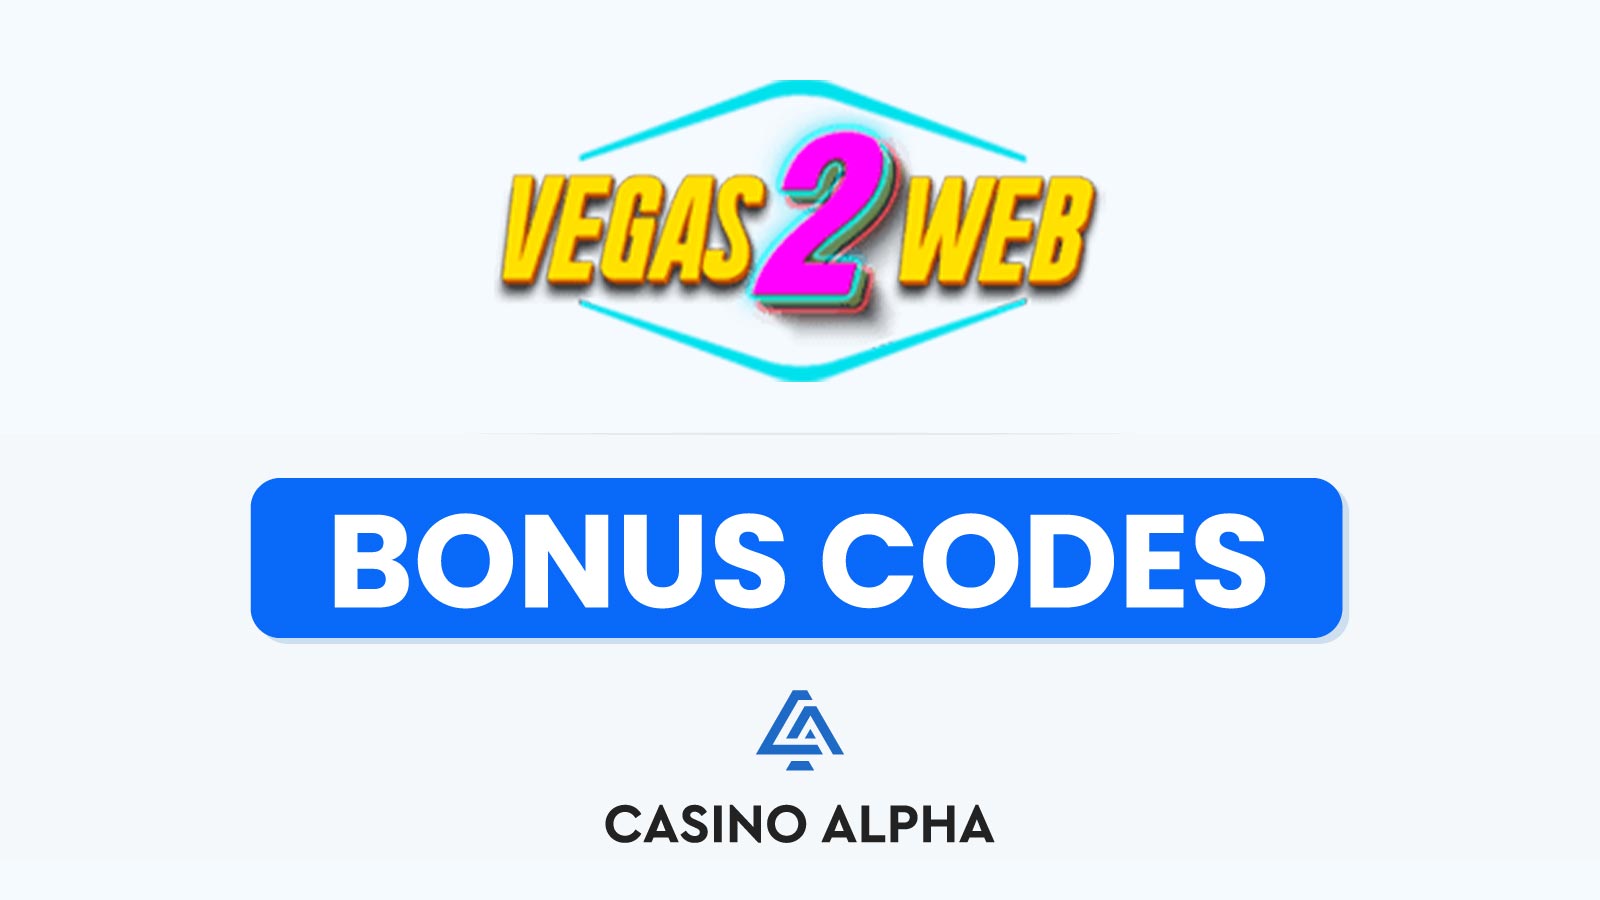 vegasweb no deposit bonus codes